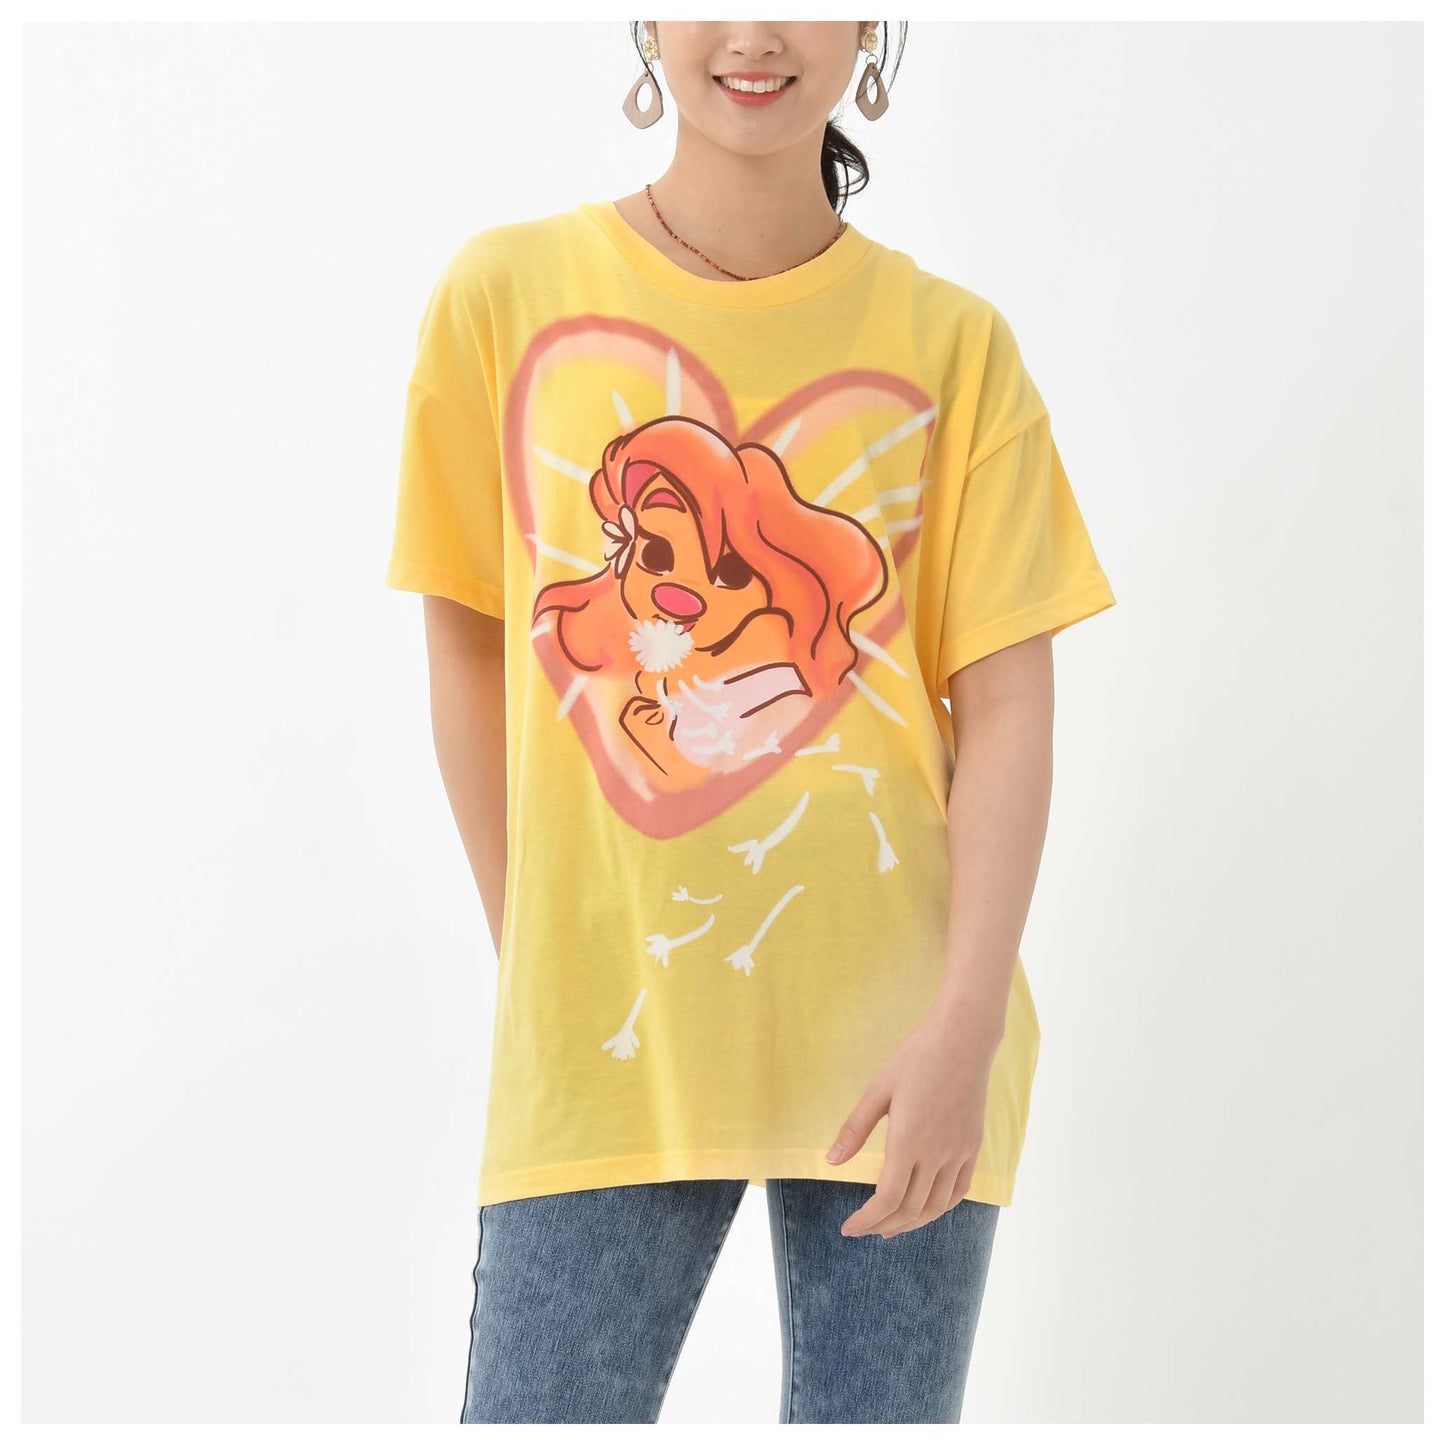 Disney Store - Roxane Tanz mit Goofy - Kurzarm T-Shirt